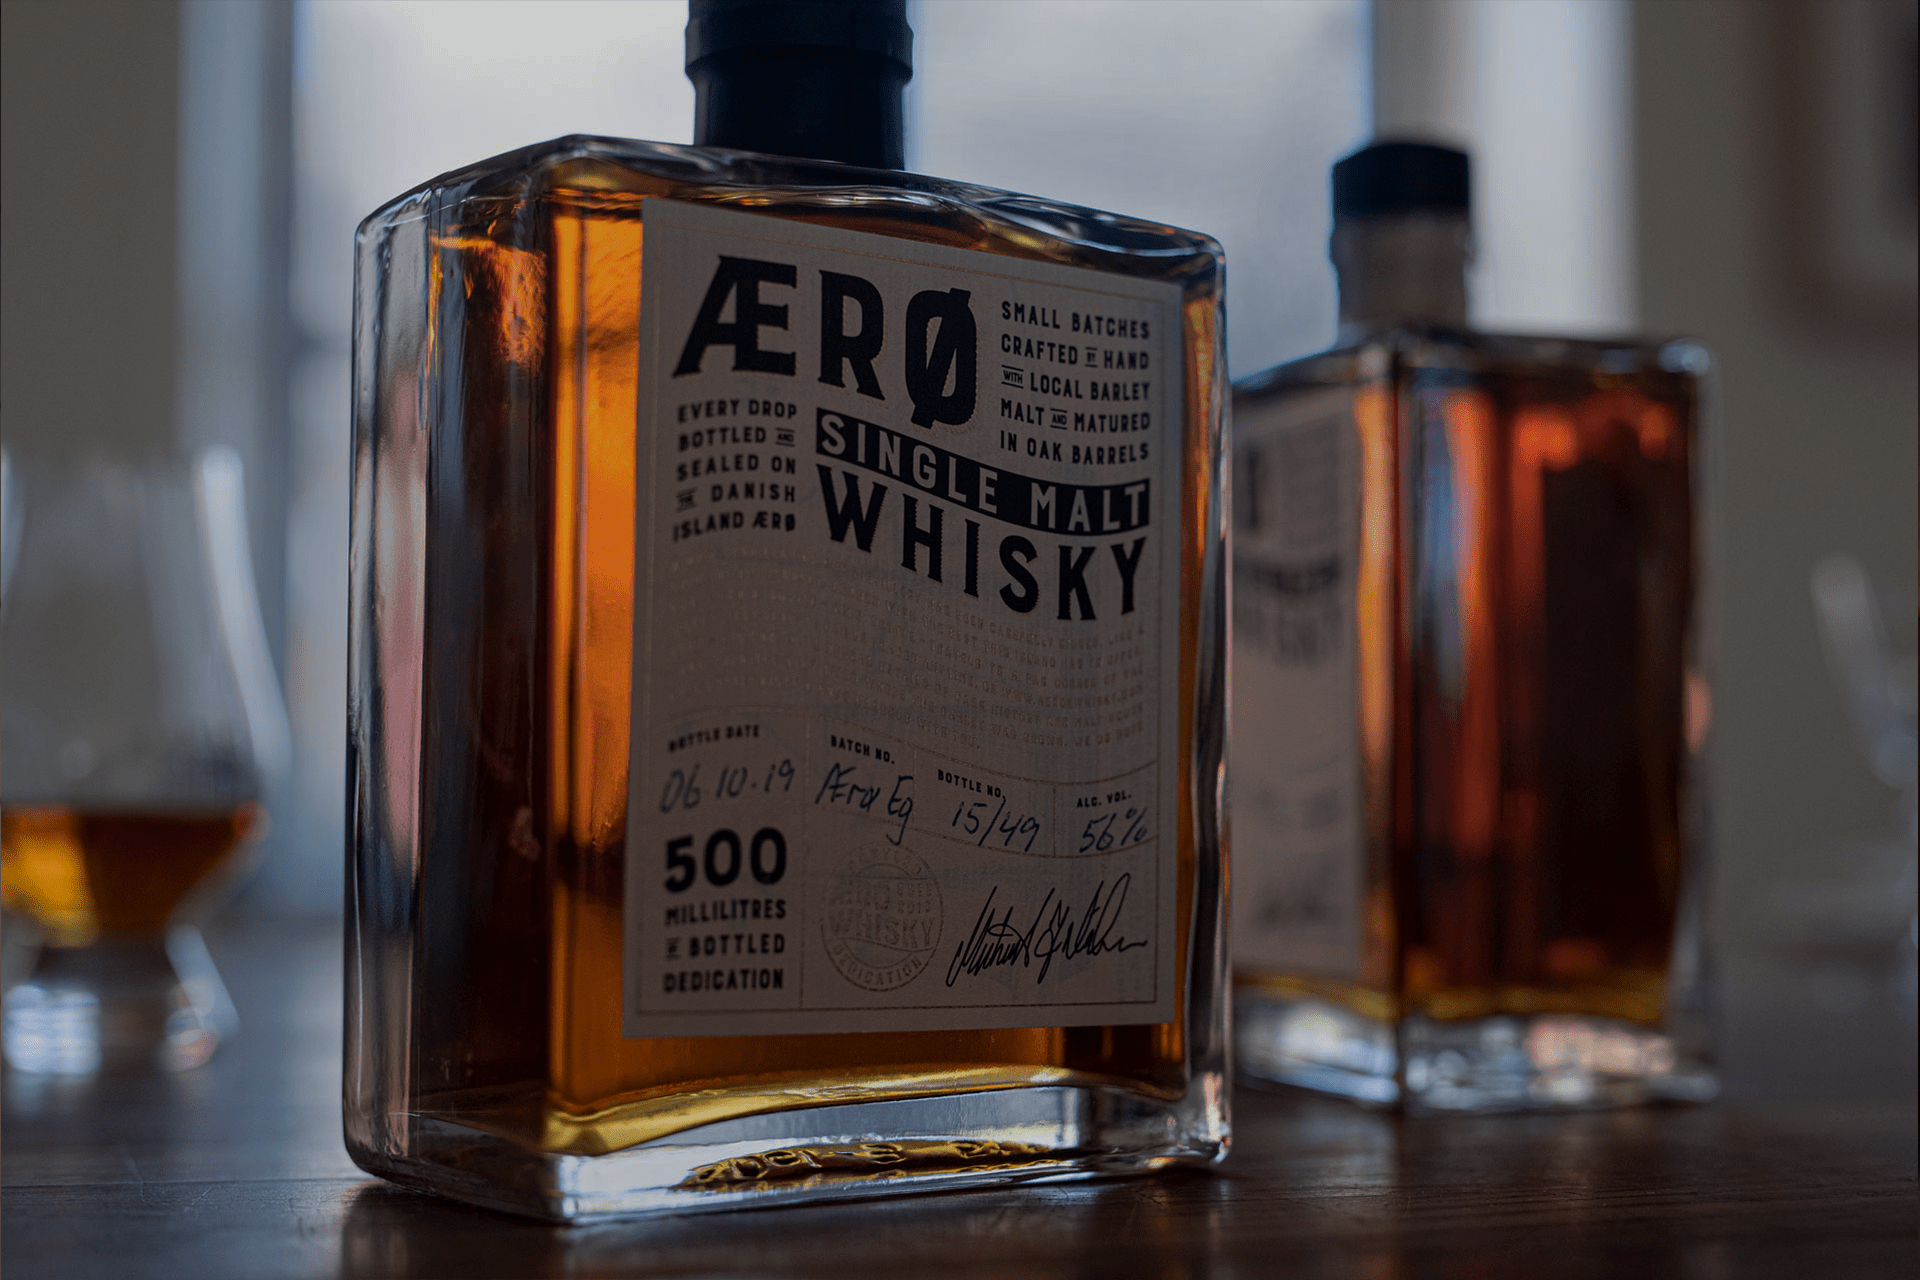 Dedikation på flaske – Ærø Whisky